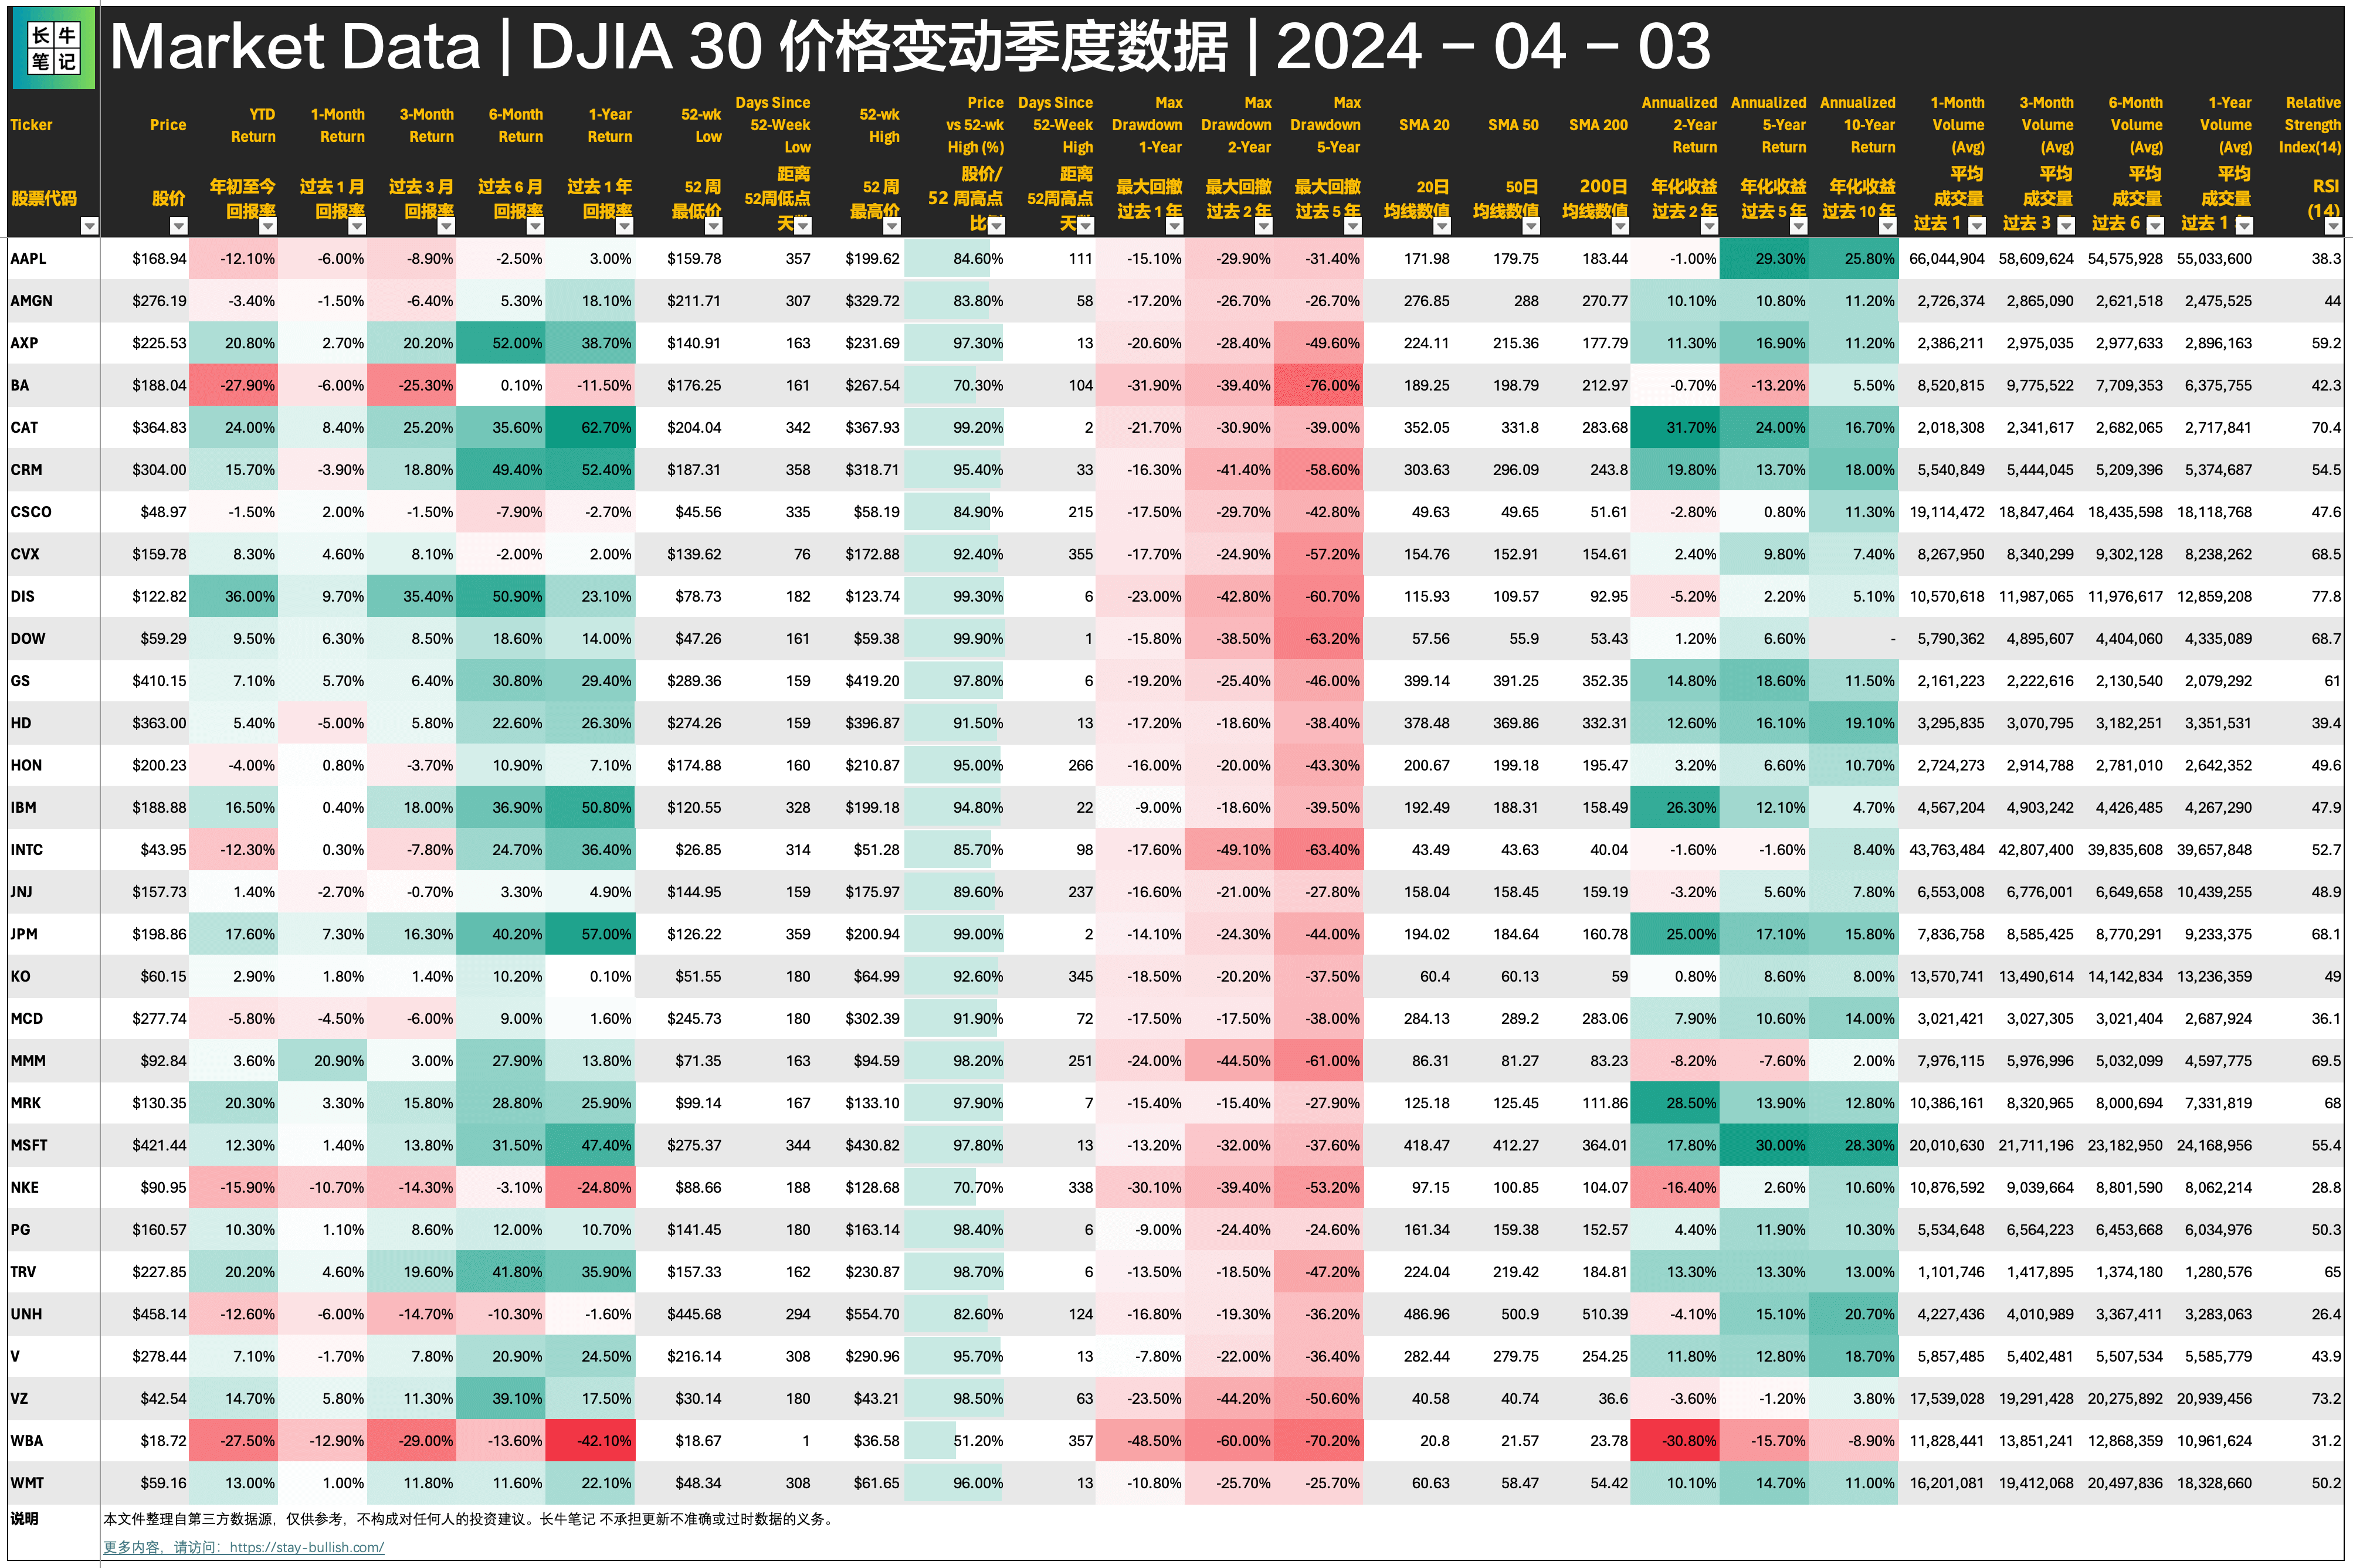 Market Data 季度更新数据 24-04-03